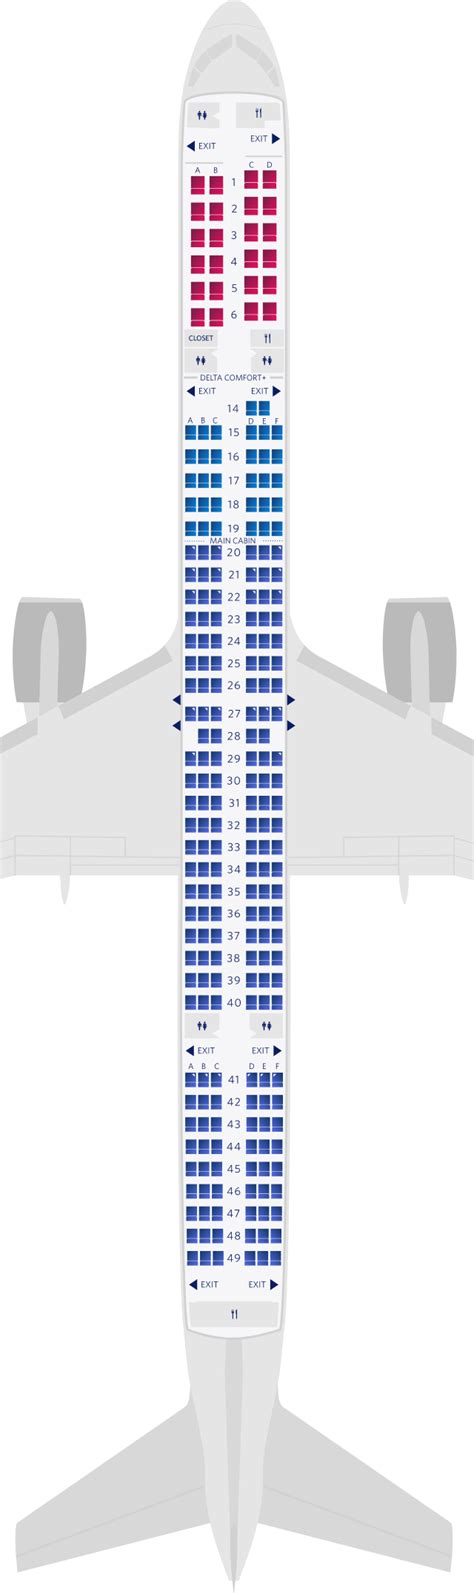 757-300 seat map delta. 18.6 in. 47 cm. UNDERSEAT DIMENSIONS. (depth x width x height) 12 in x 9.5 in x 7 in. 12 in x 16 in x 6 in. 12 in x 16 in x 6 in. AMENITIES. 